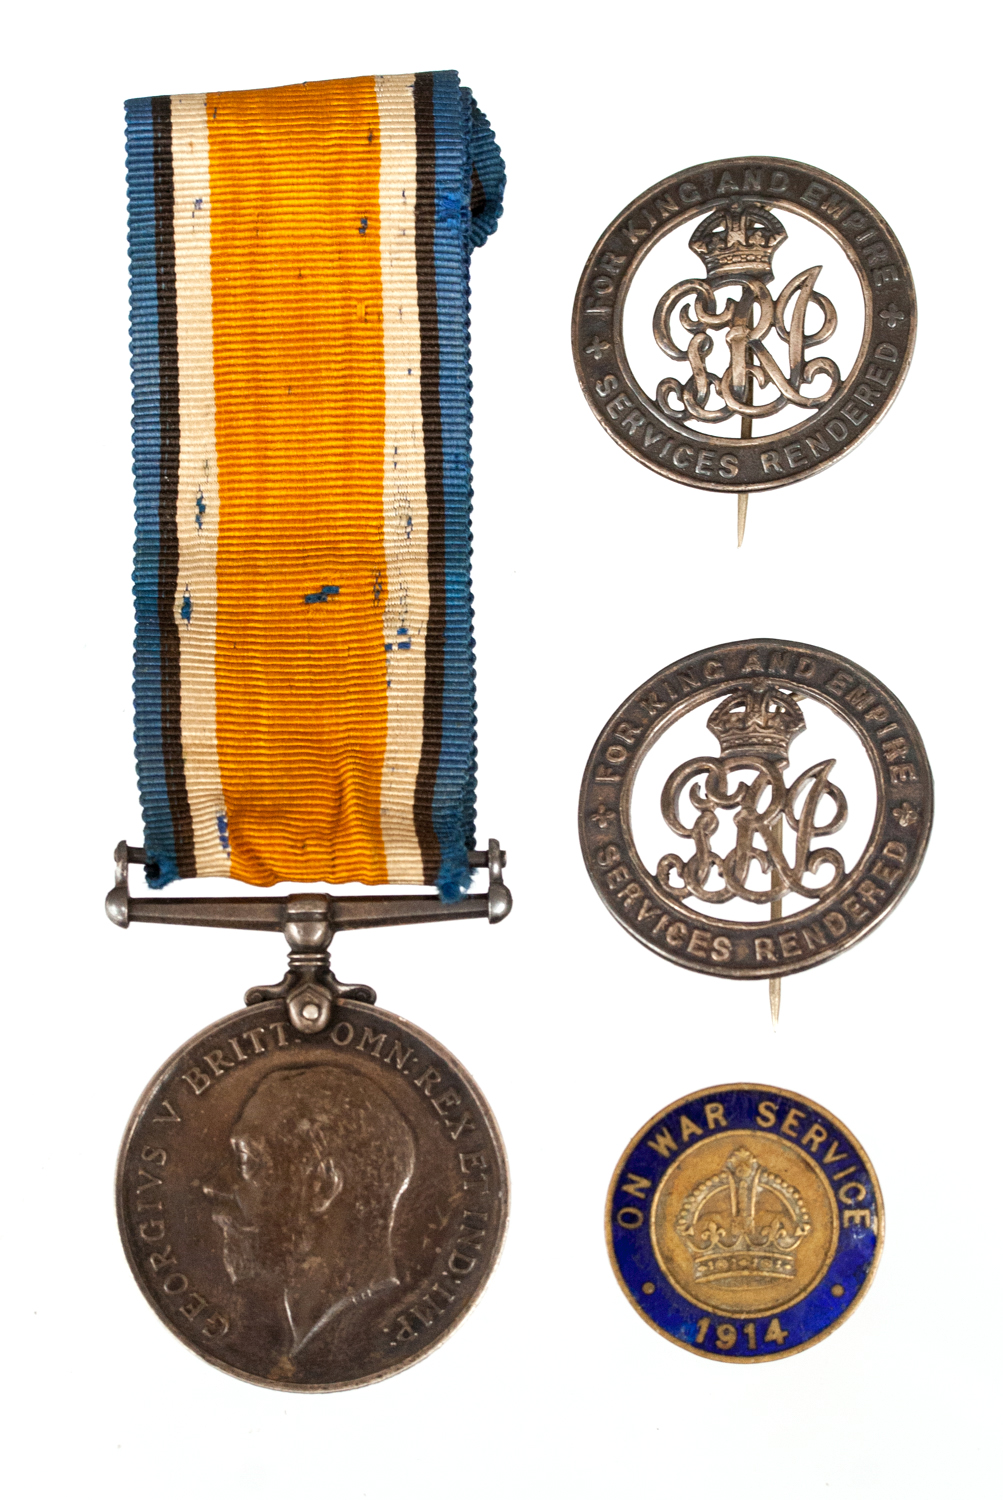 World War One War medal, 39413 PTE B.C Culverhouse, Cheshire Regiment, wound badges x 2 and War